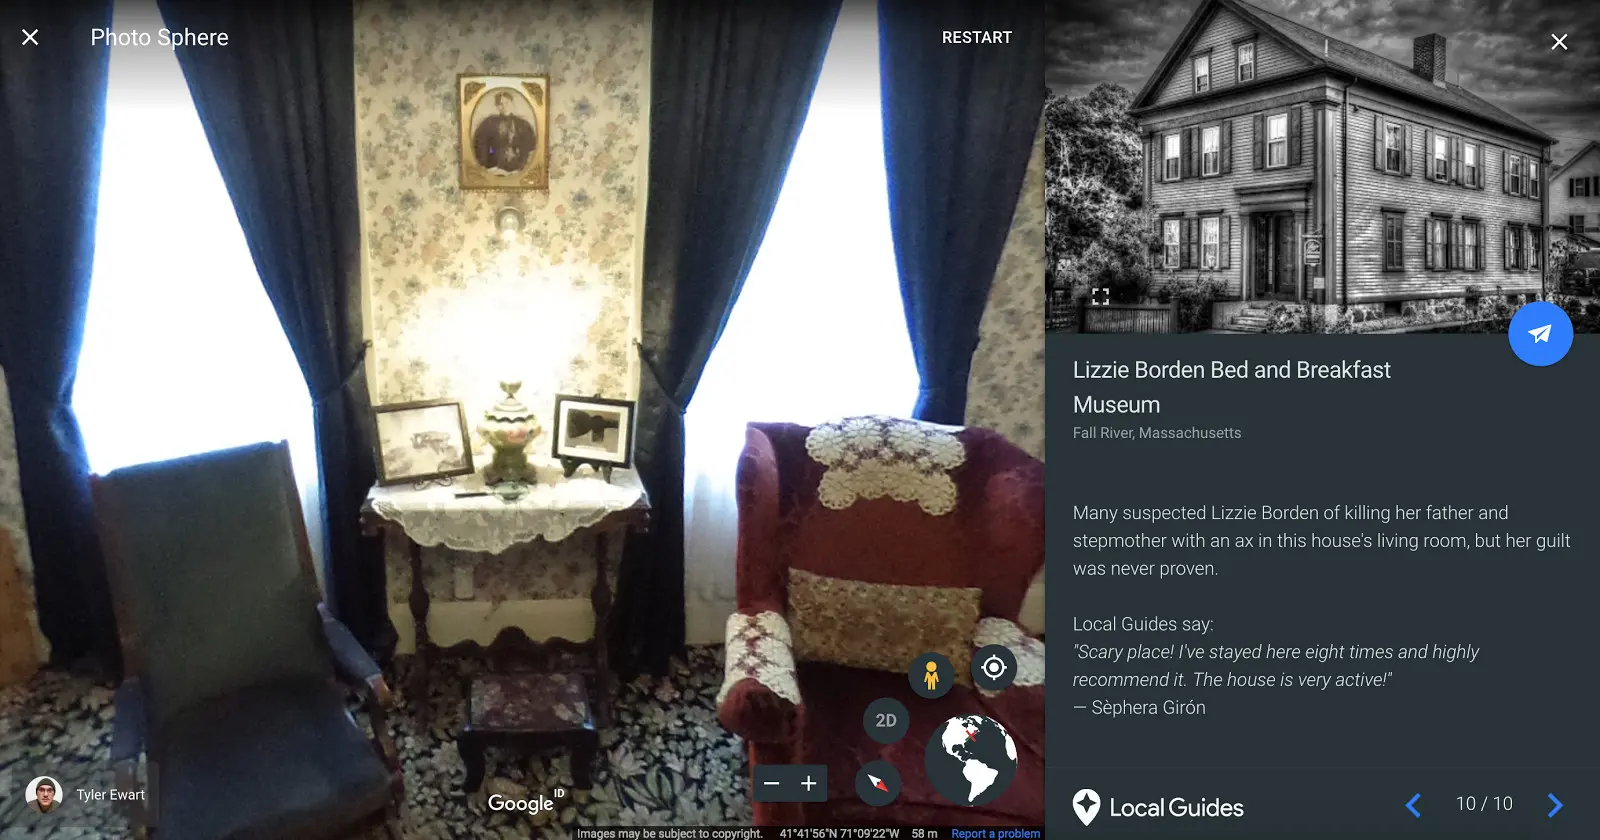 Museum Lizzie Borden Bed and Breakfast, tempat paling seram versi Google (Sumber: Google Local Guides)